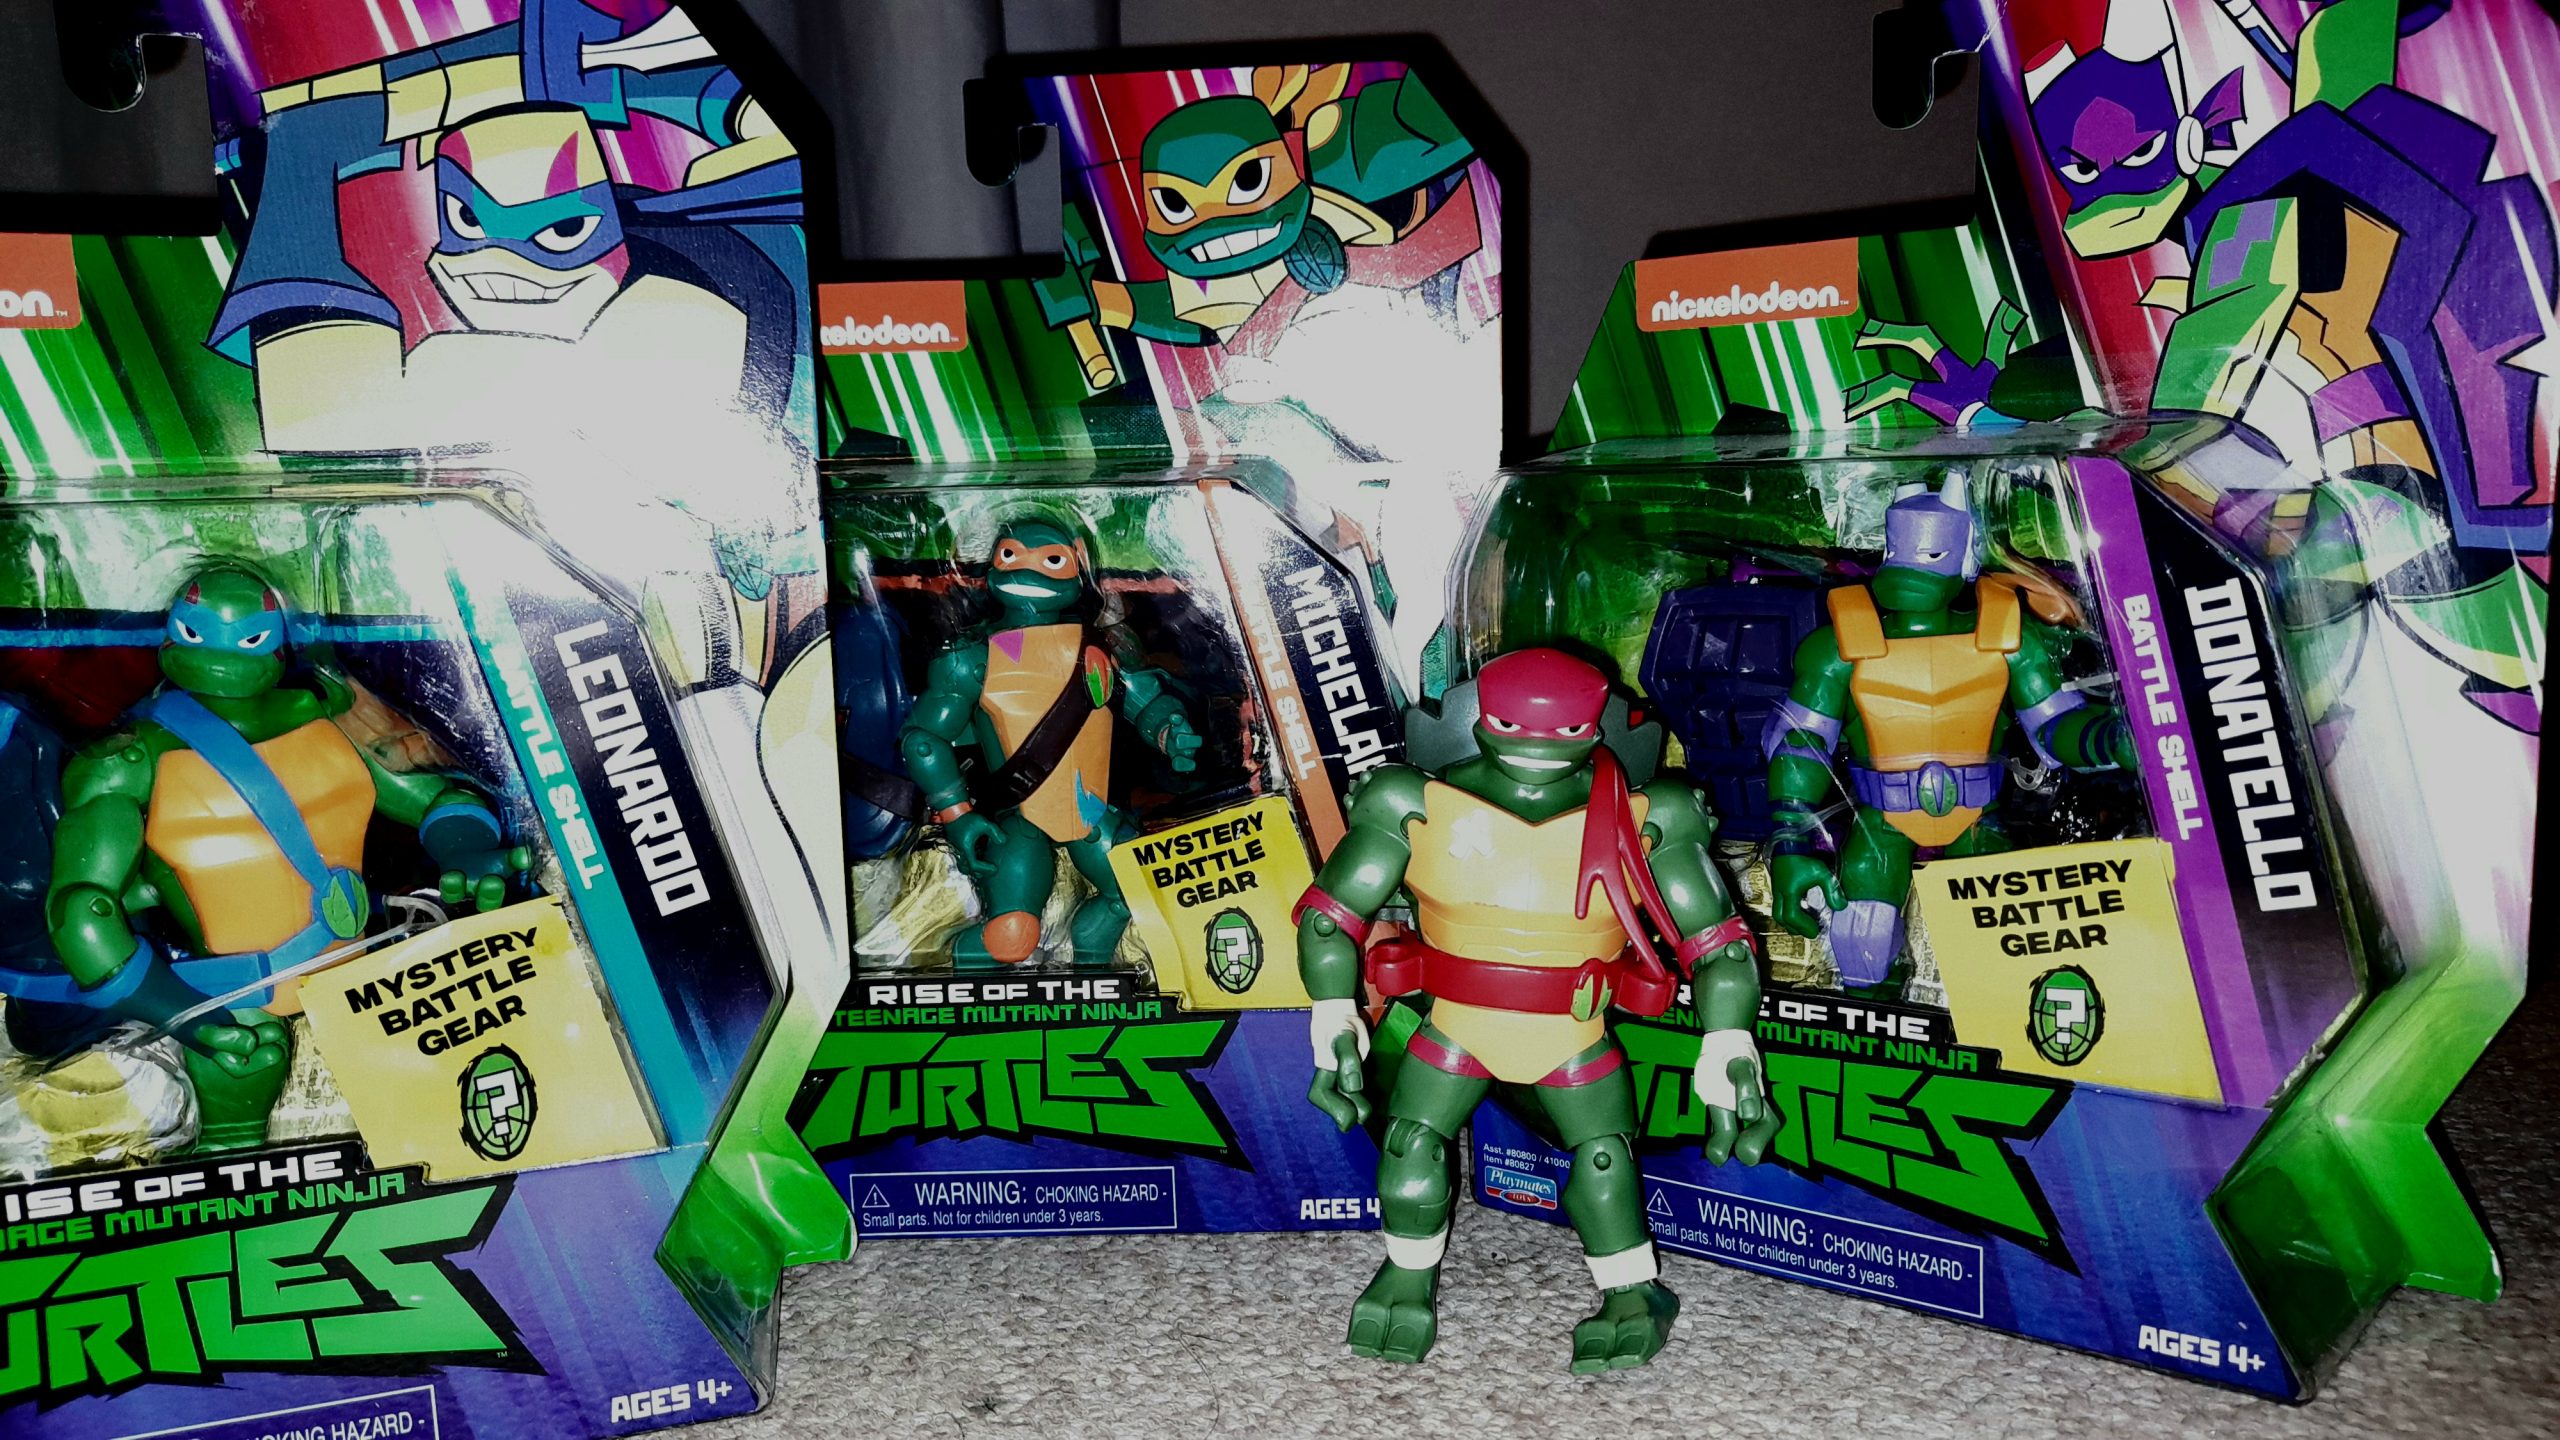 TMNT Turtles Action Figures – Complete Set